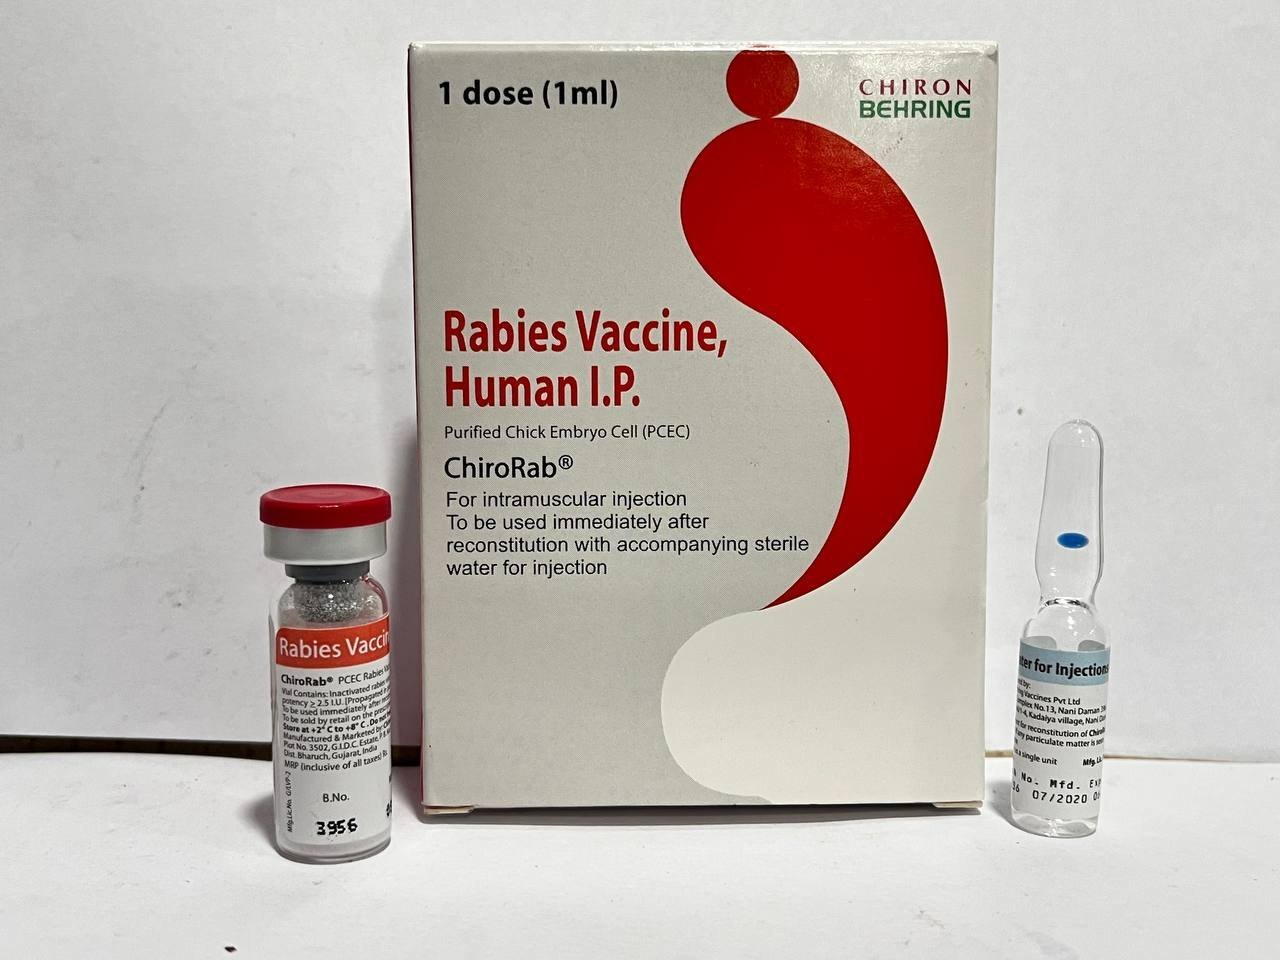 Rabies Vaccine